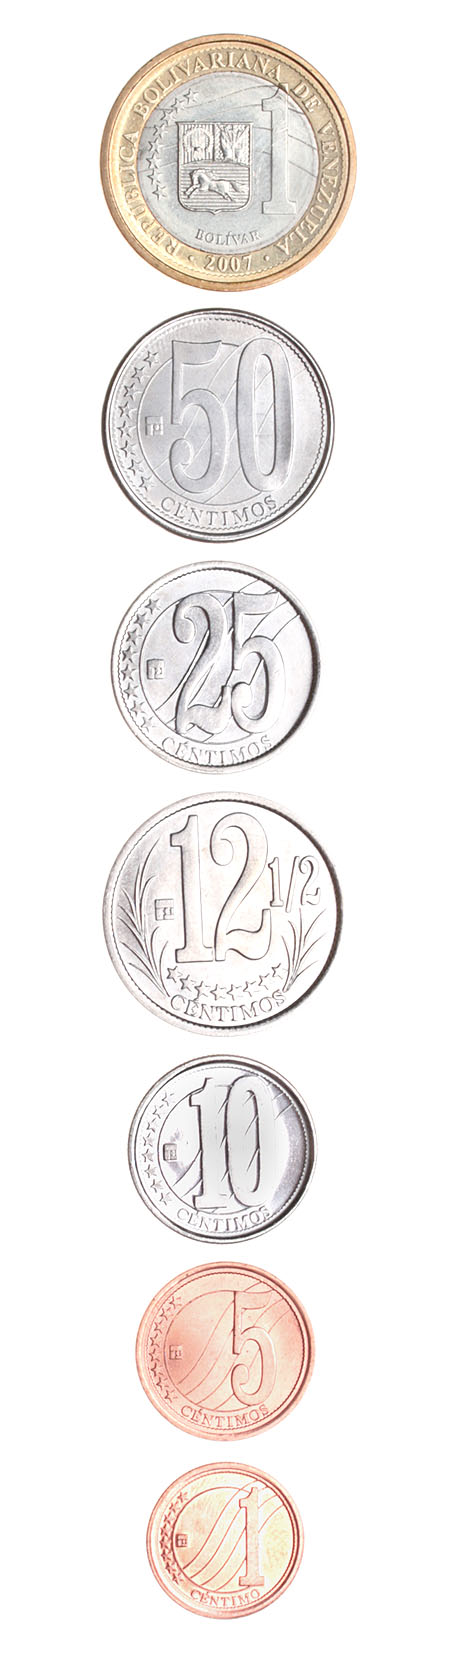 Комплект из 7 монет Металл Венесуэла, 2007 год 2007 г инфо 10605g.